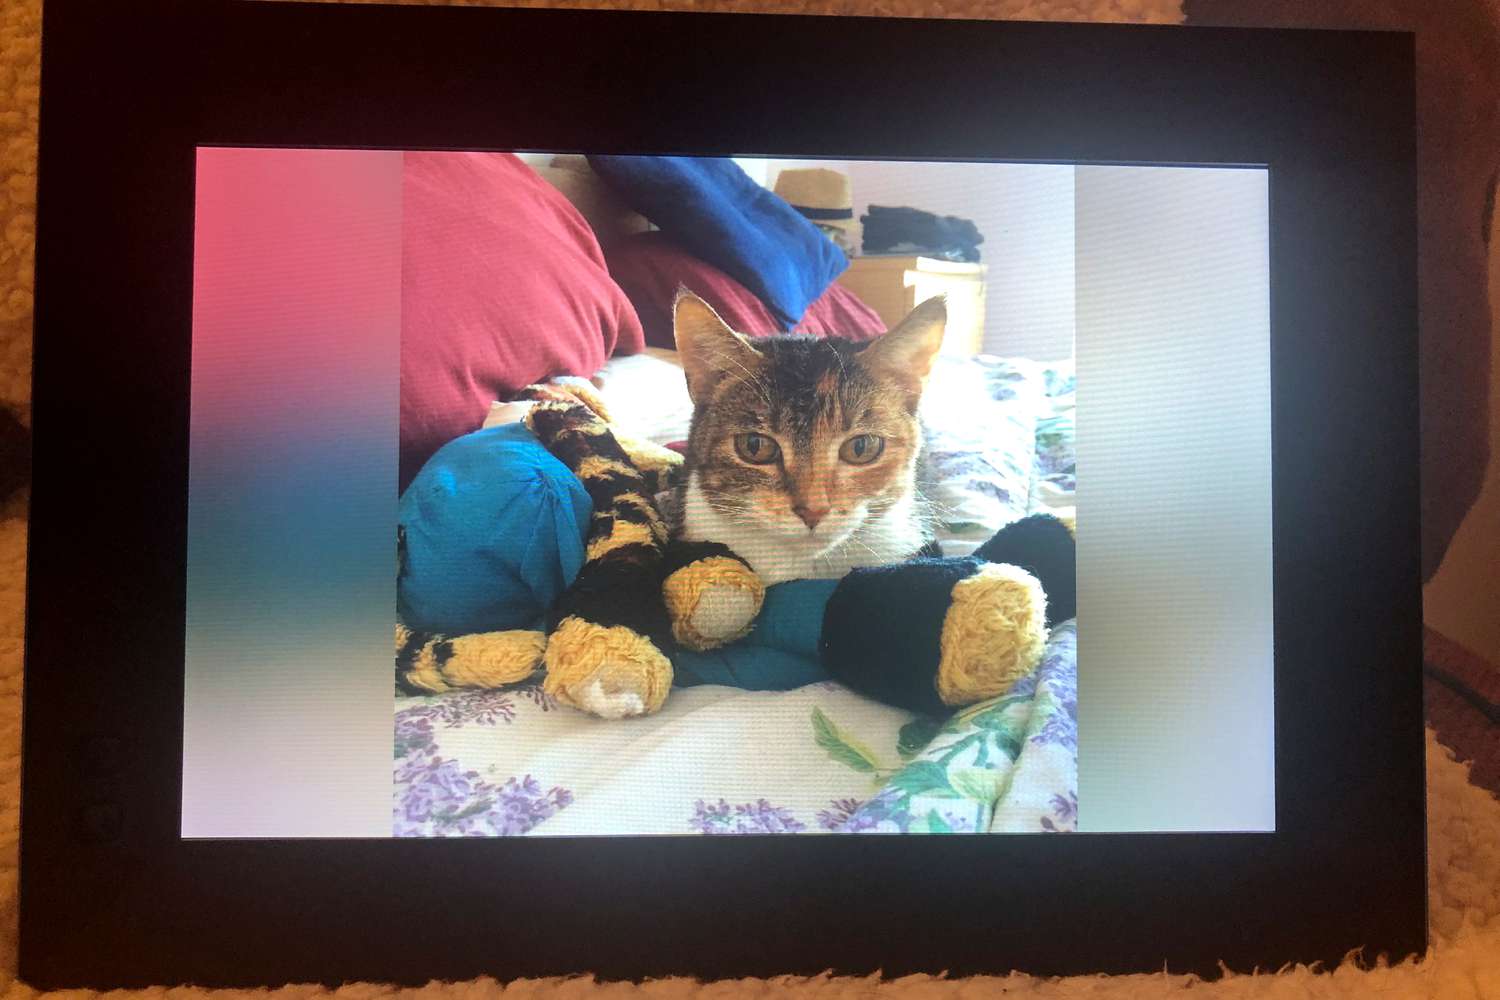 Nixplay 9.7 inch Smart Digital Photo Frame displaying a cat